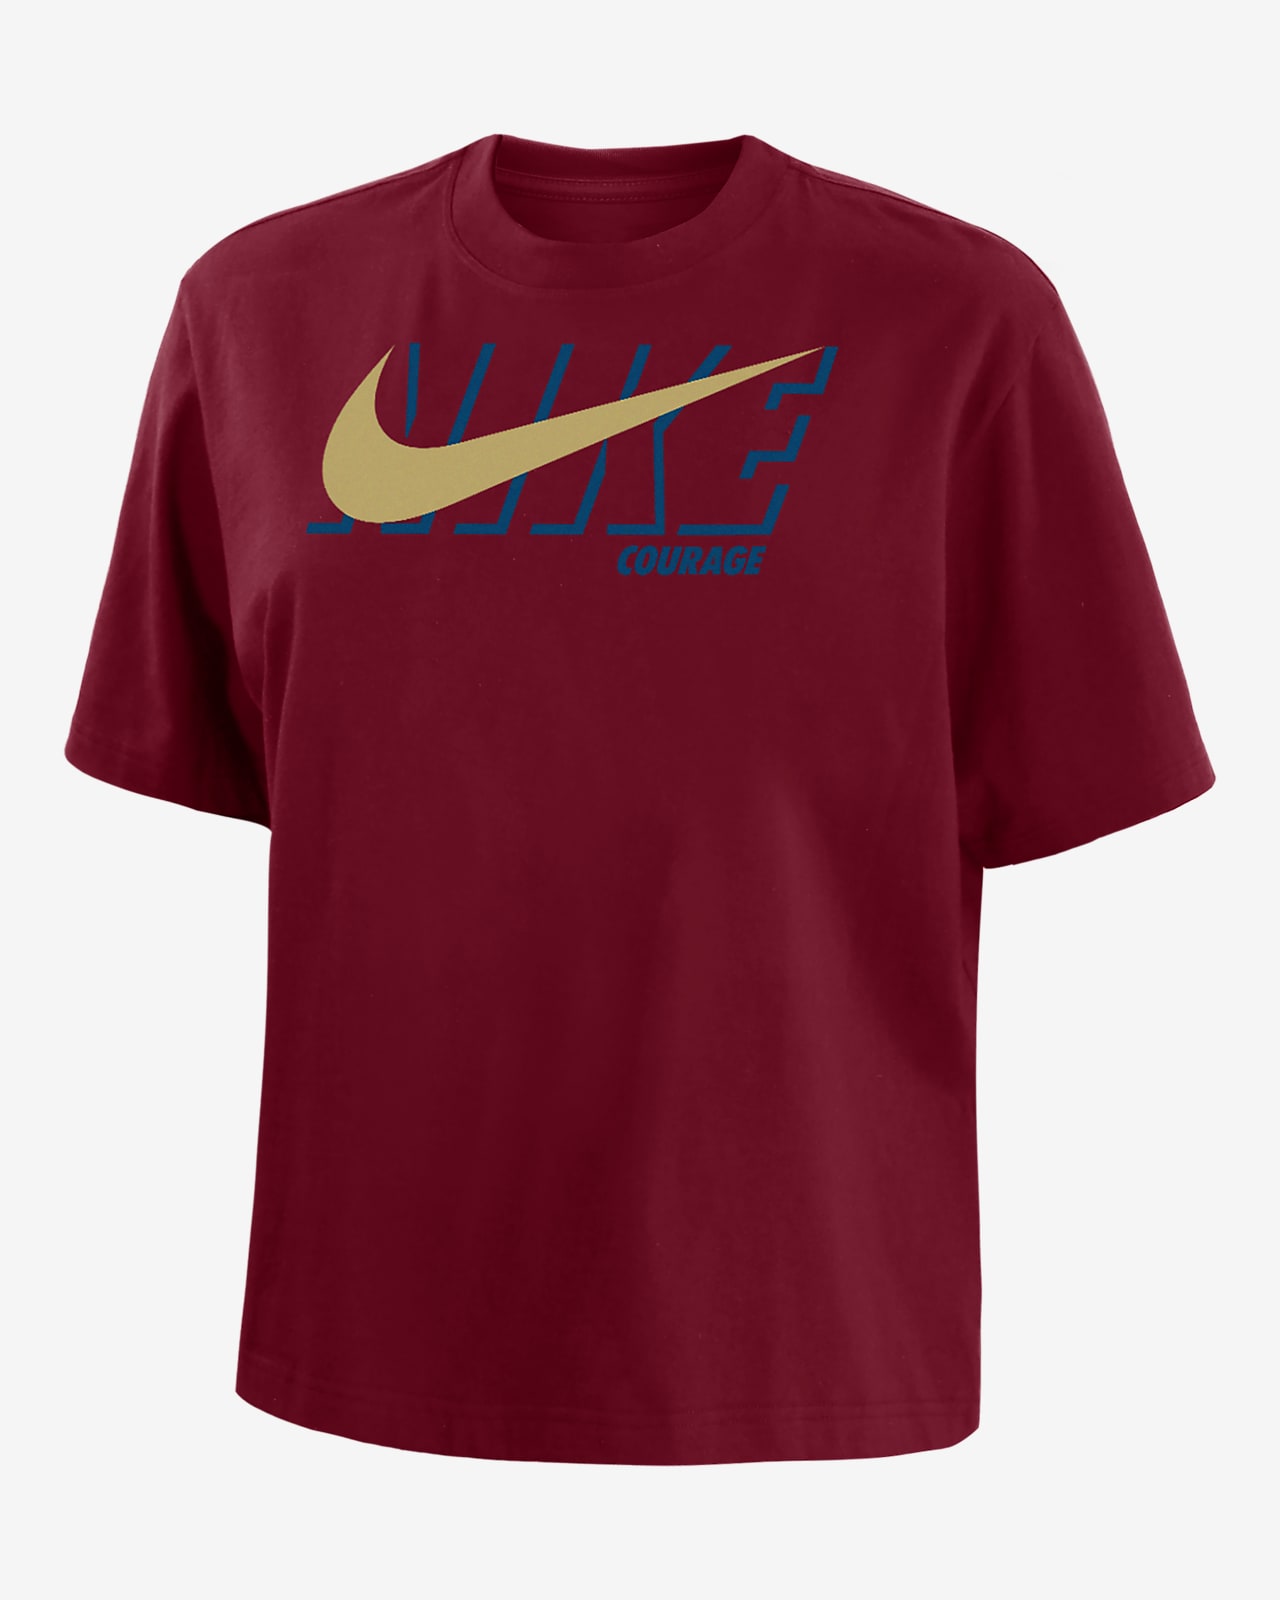 North Carolina Courage Women's Nike Soccer T-Shirt